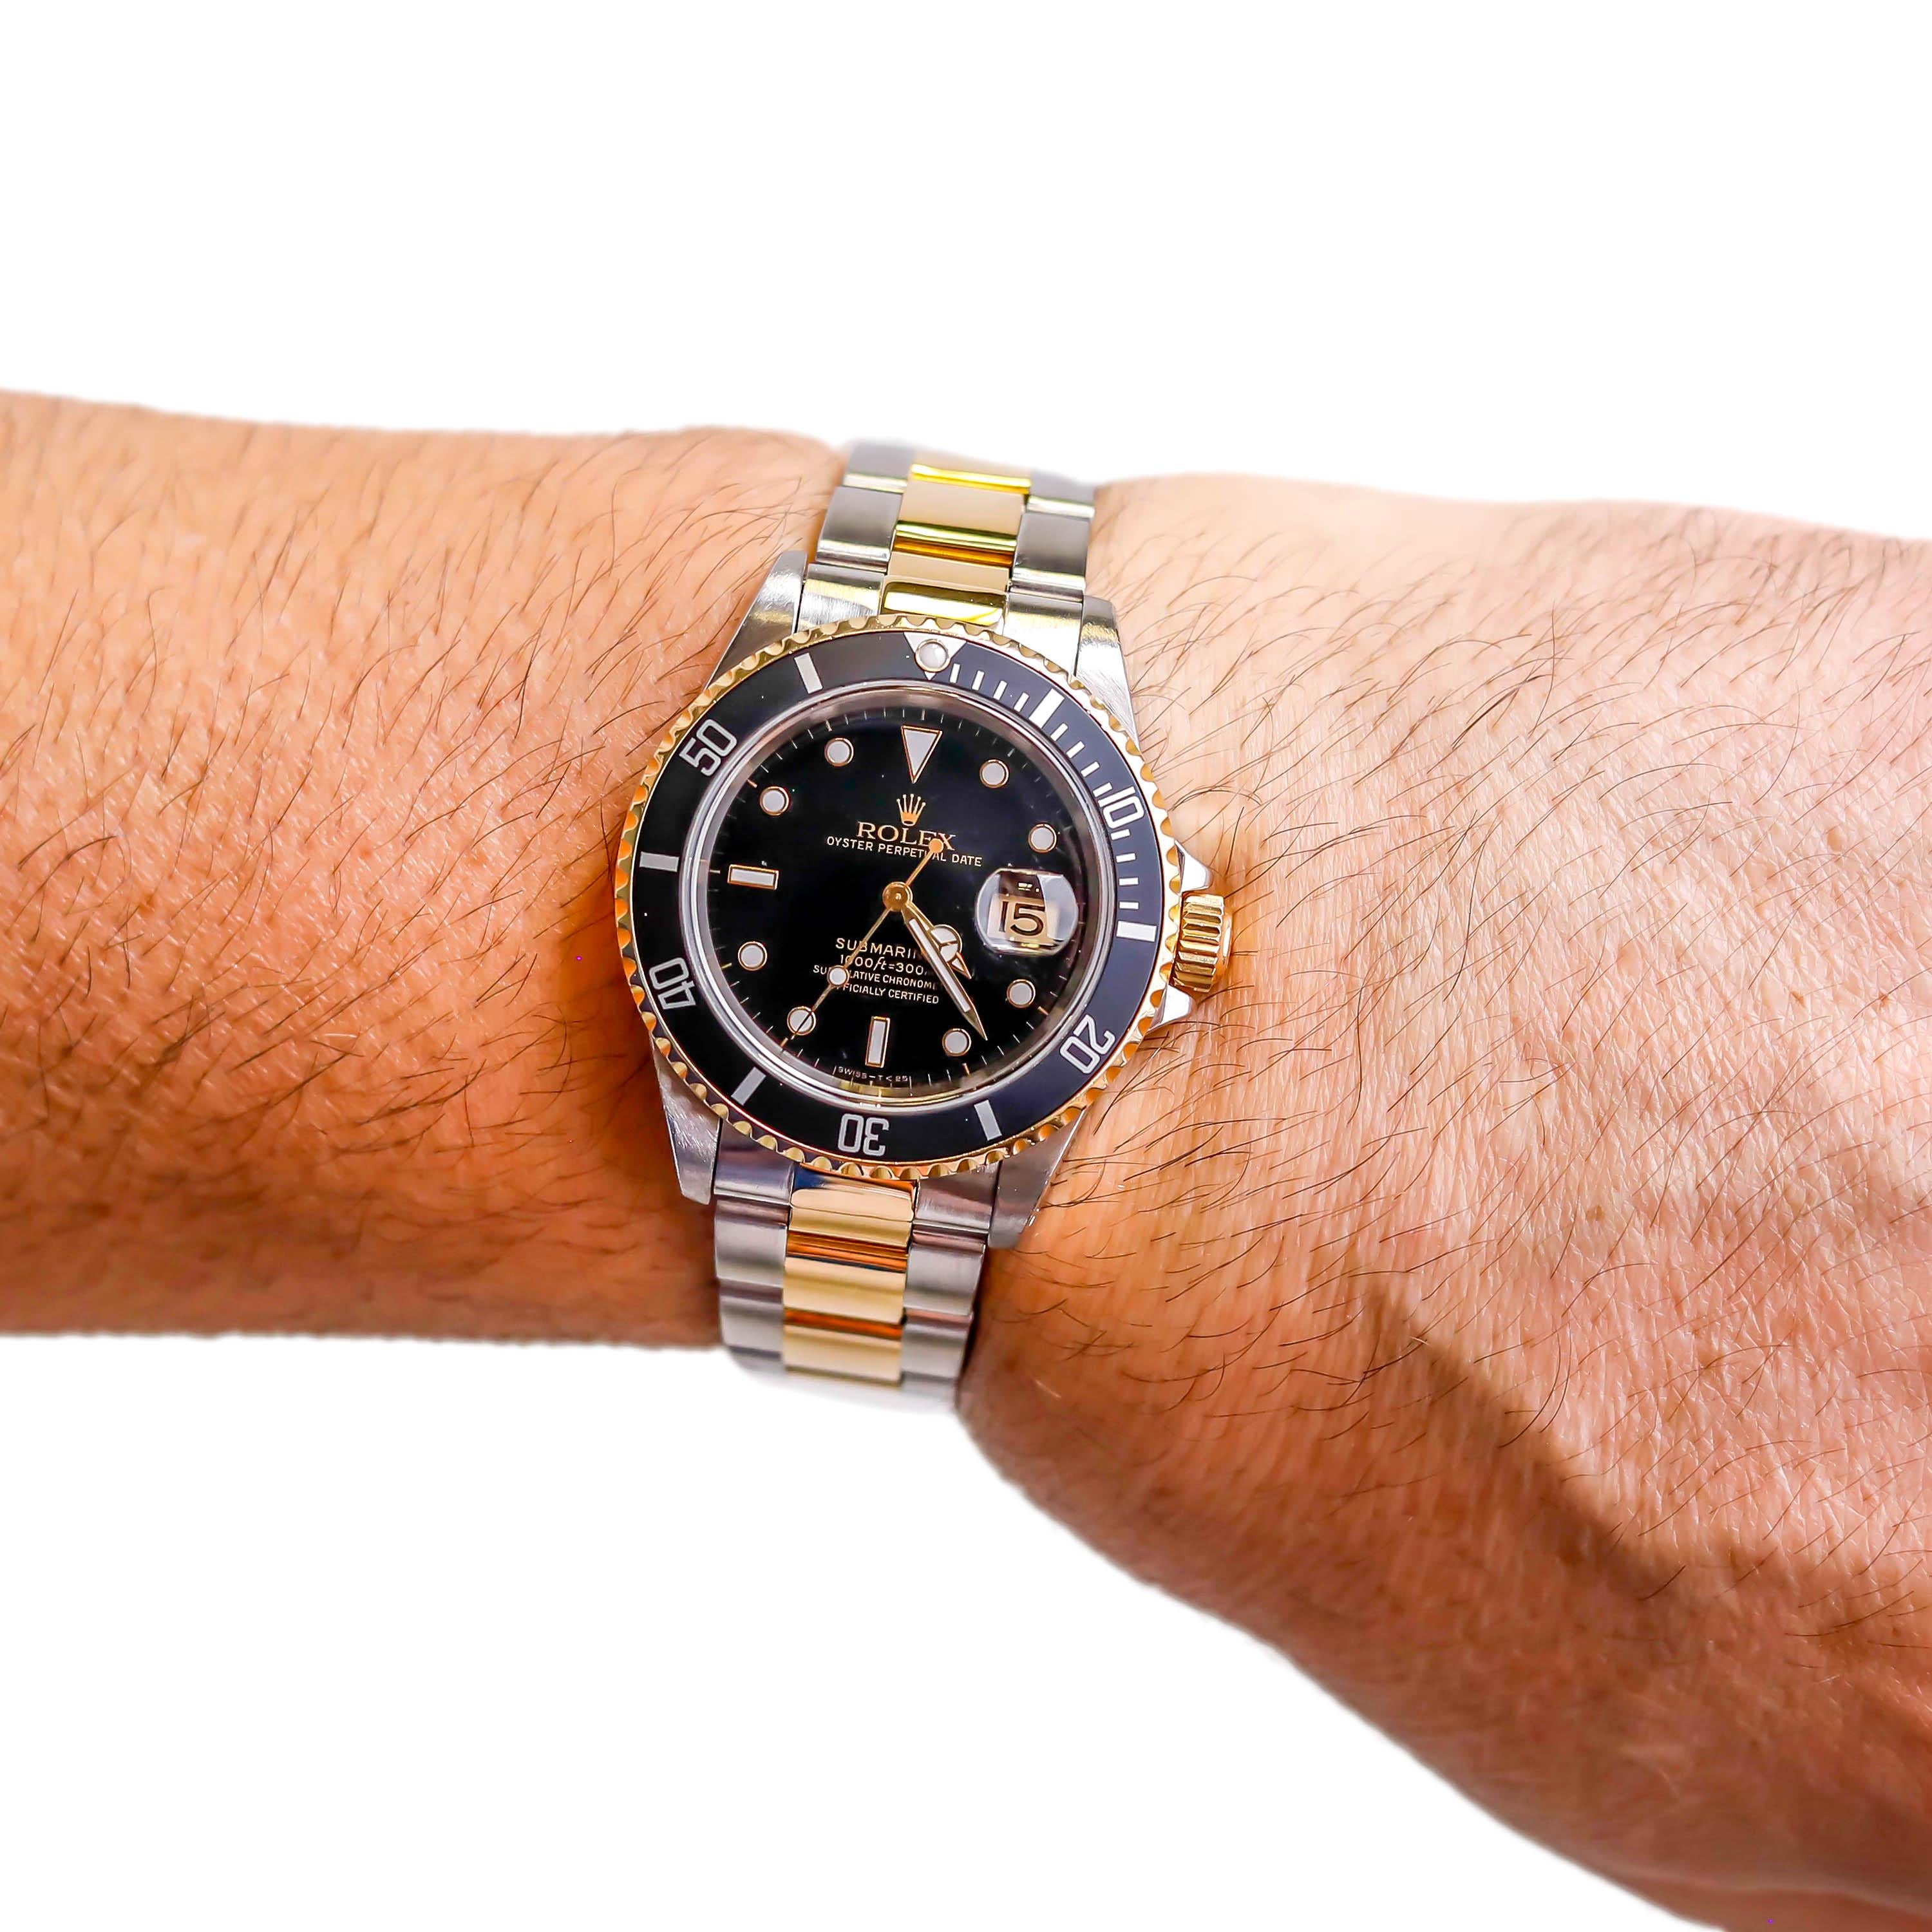 gold submariner on wrist